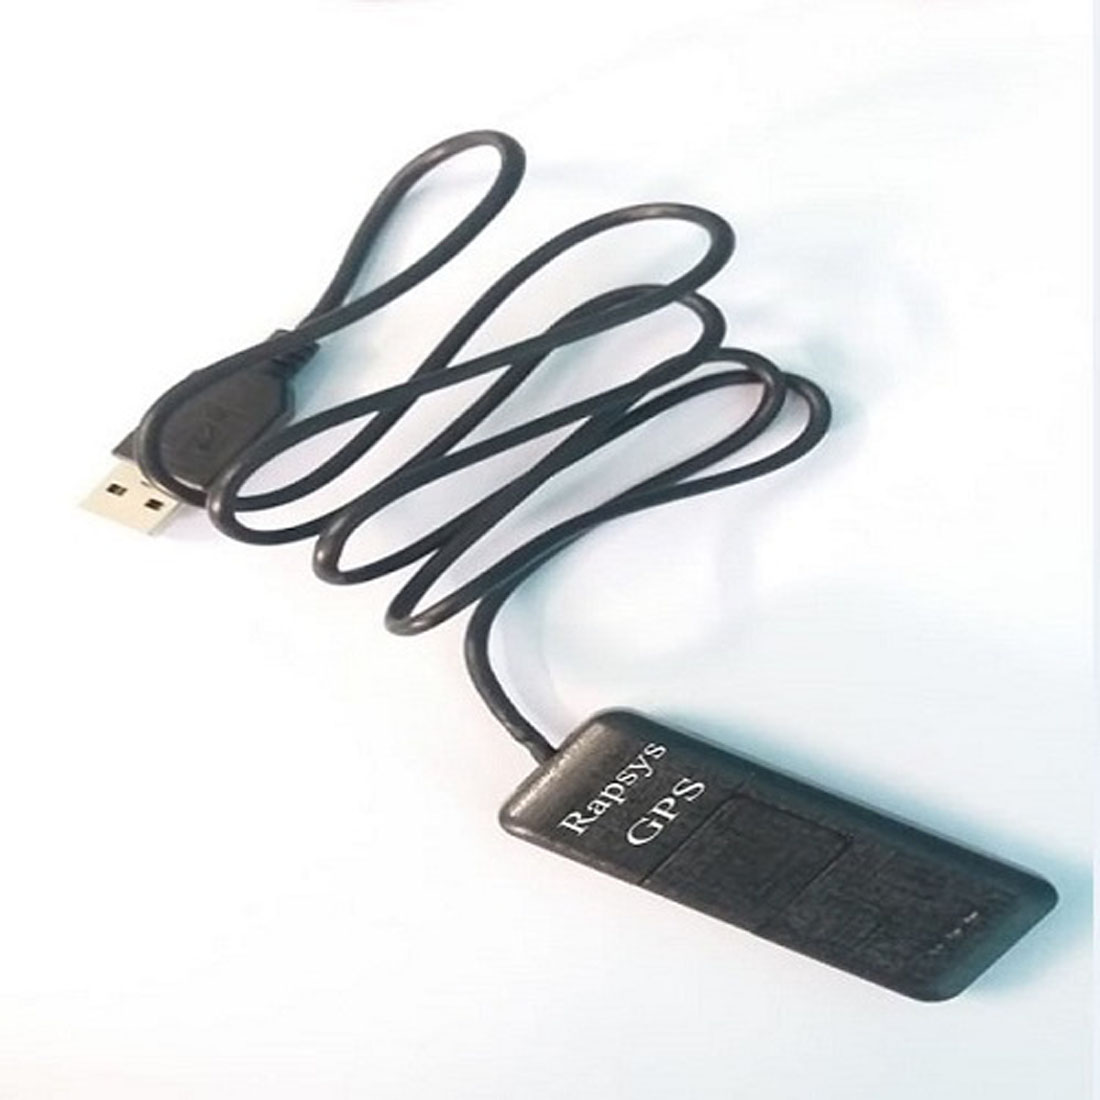 Rapsys USB Tracker